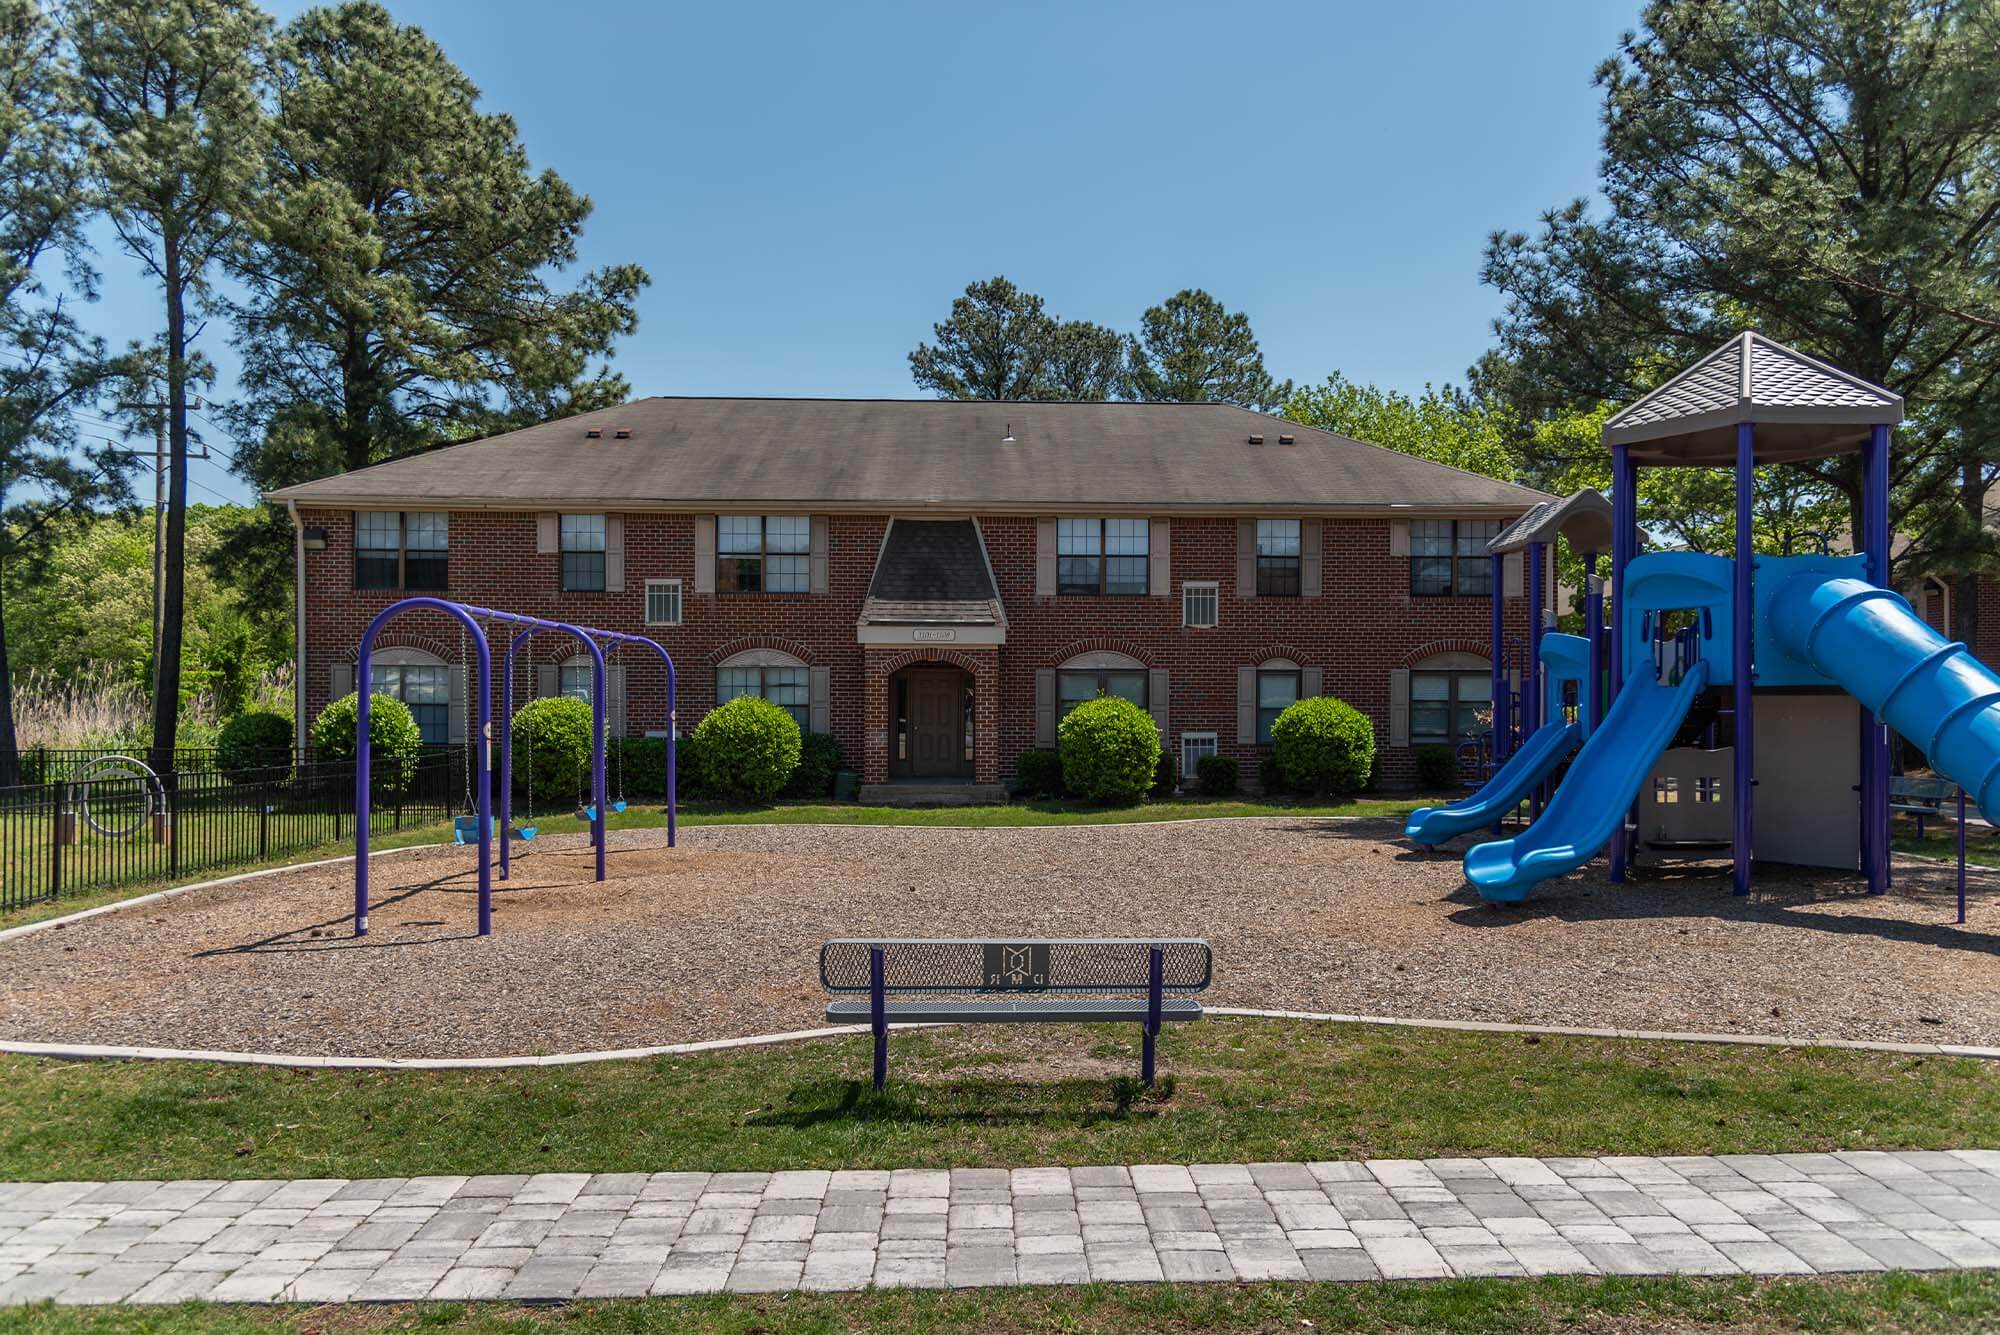 Playground at Reserves at Tidewater, Norfolk, Virginia